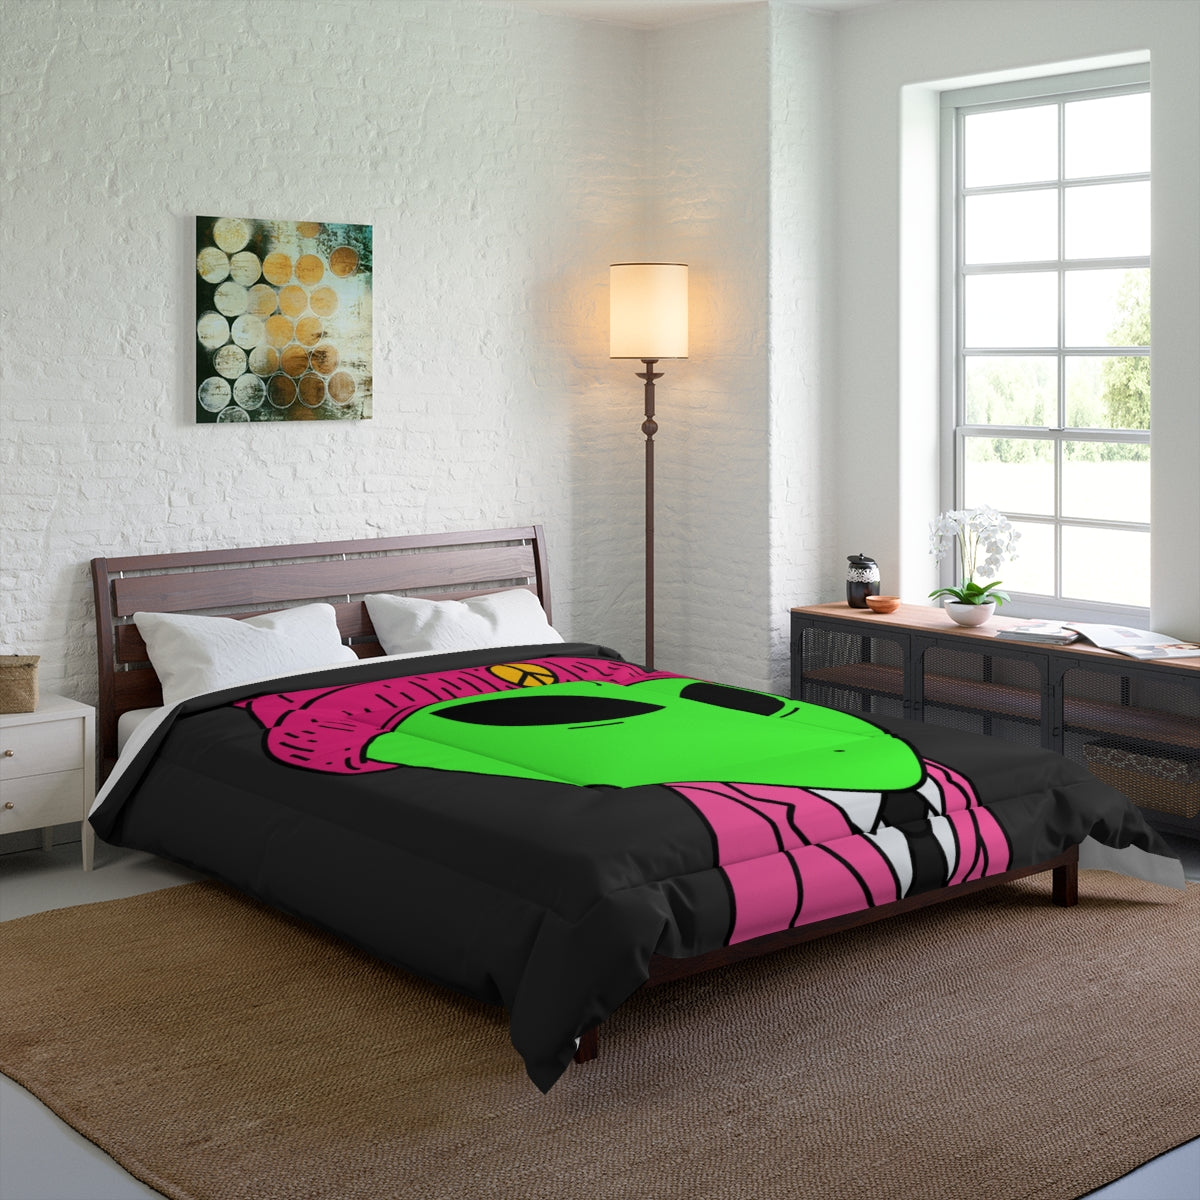 Pink Peace Hat Suit Green Alien Visitor Bed Comforter